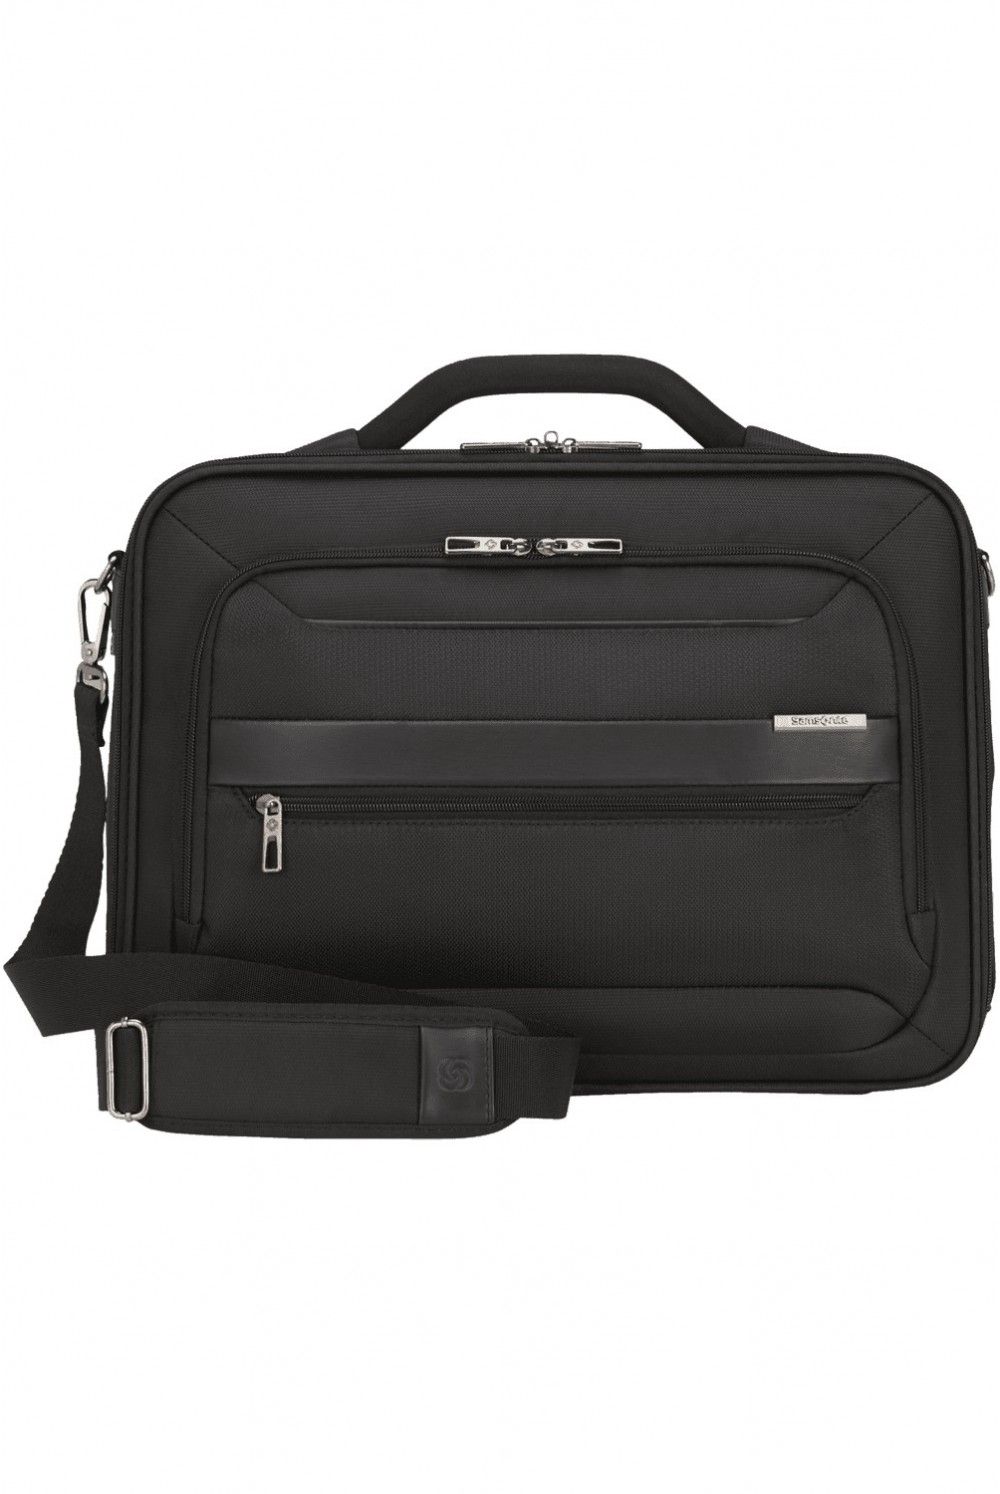 Samsonite Vectura Evo laptop bag 15.6 inches 14L